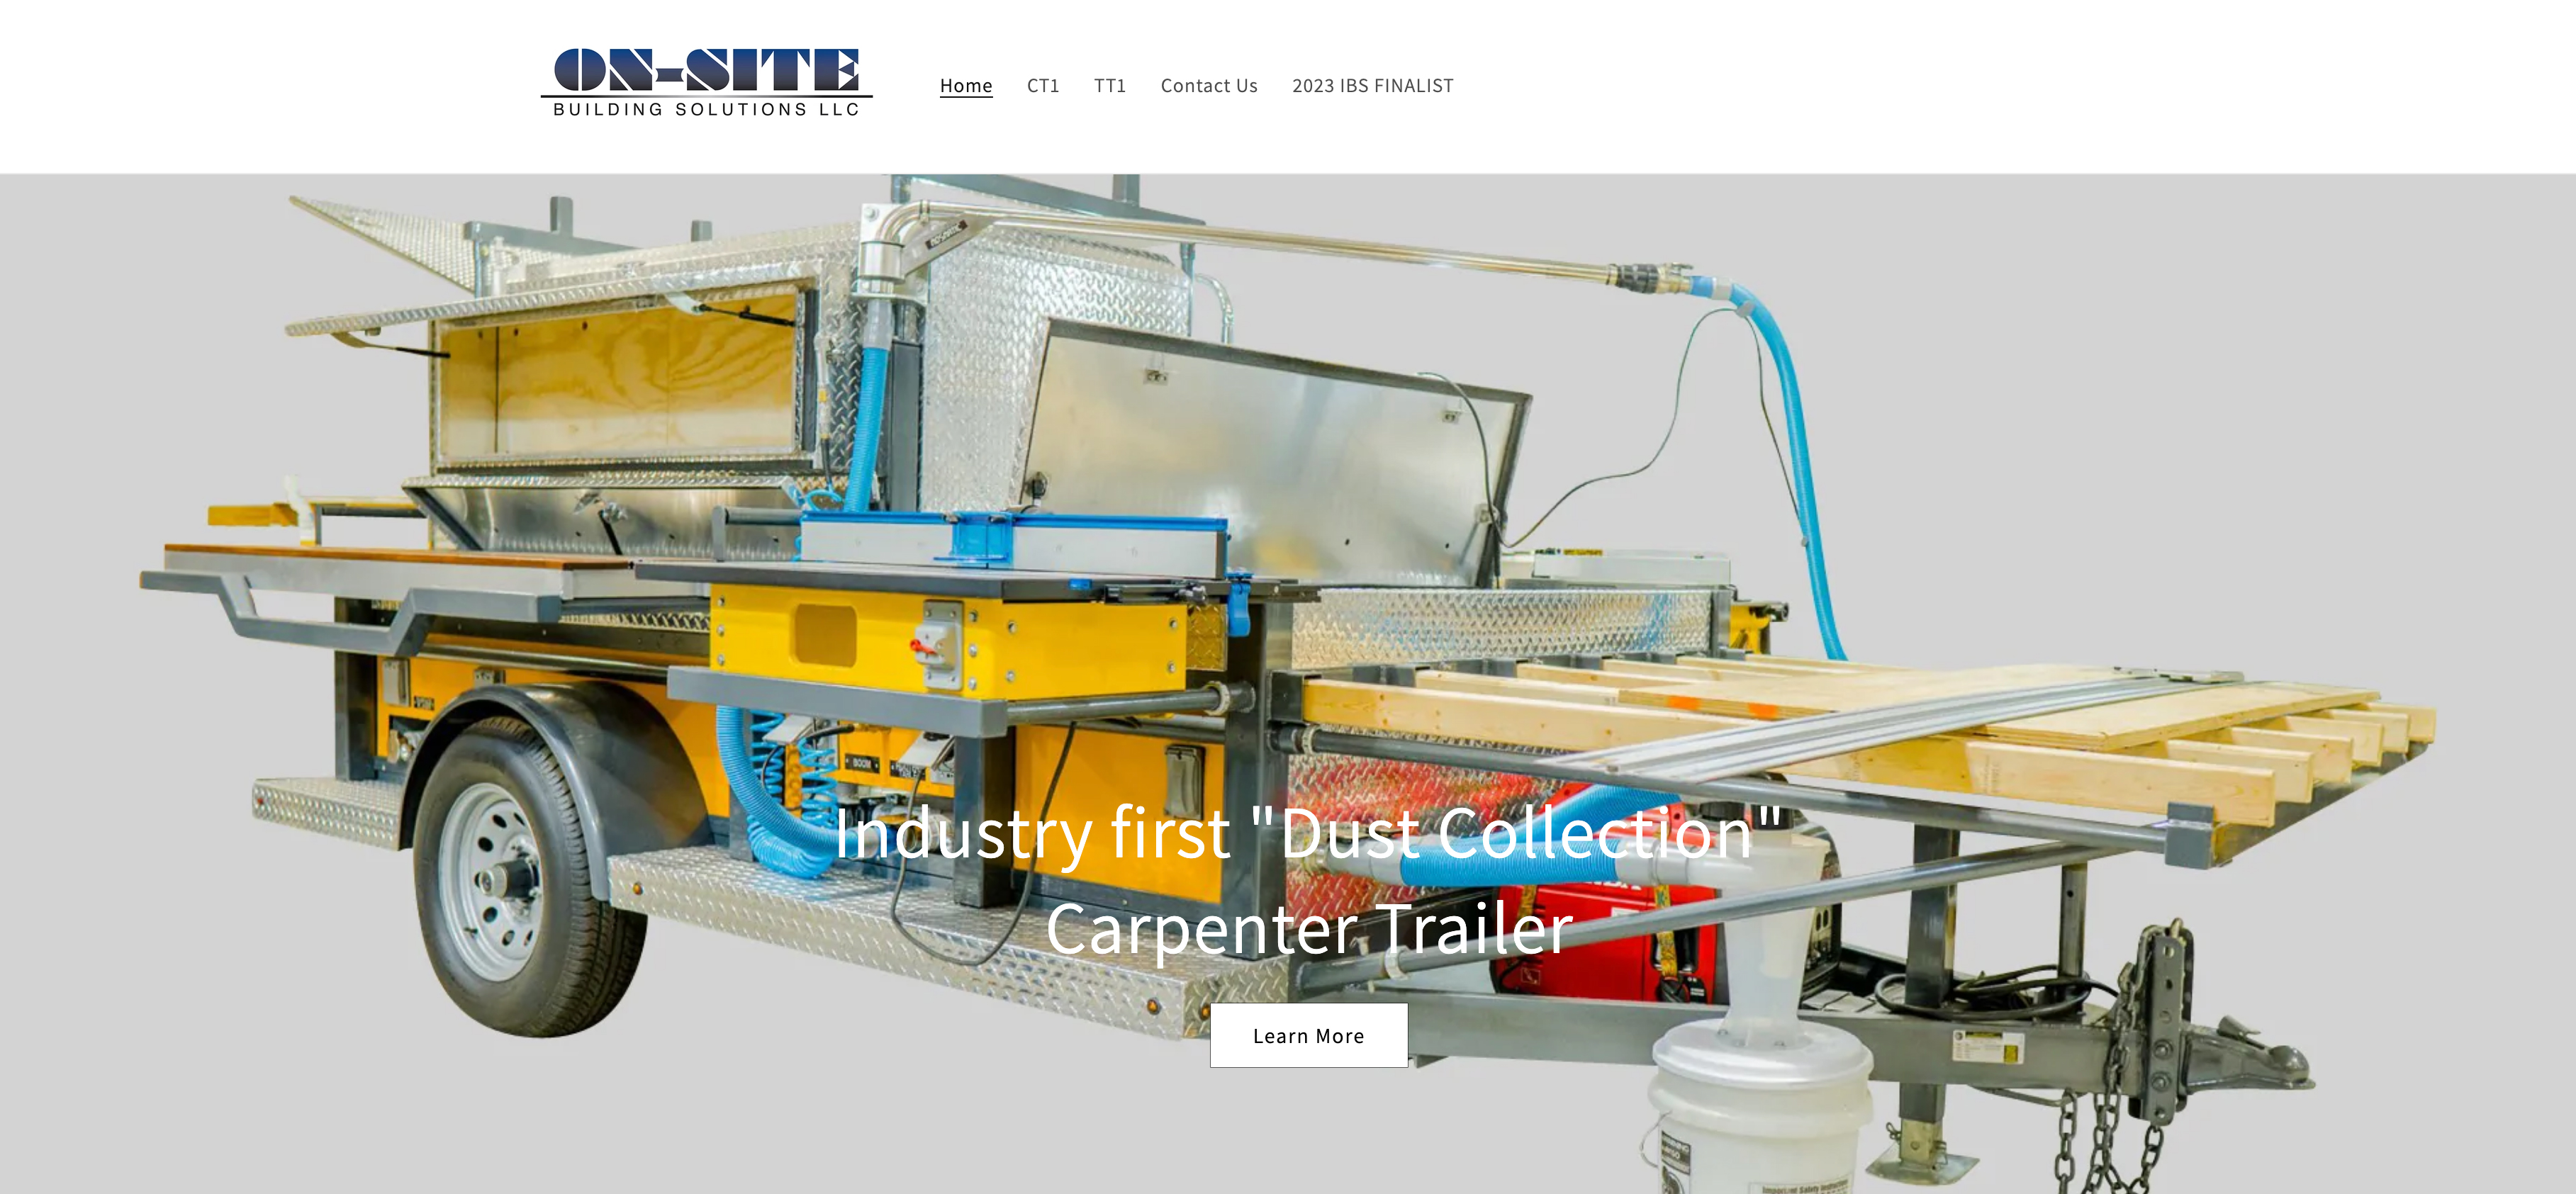 On-Site Building Solutions website screenshot